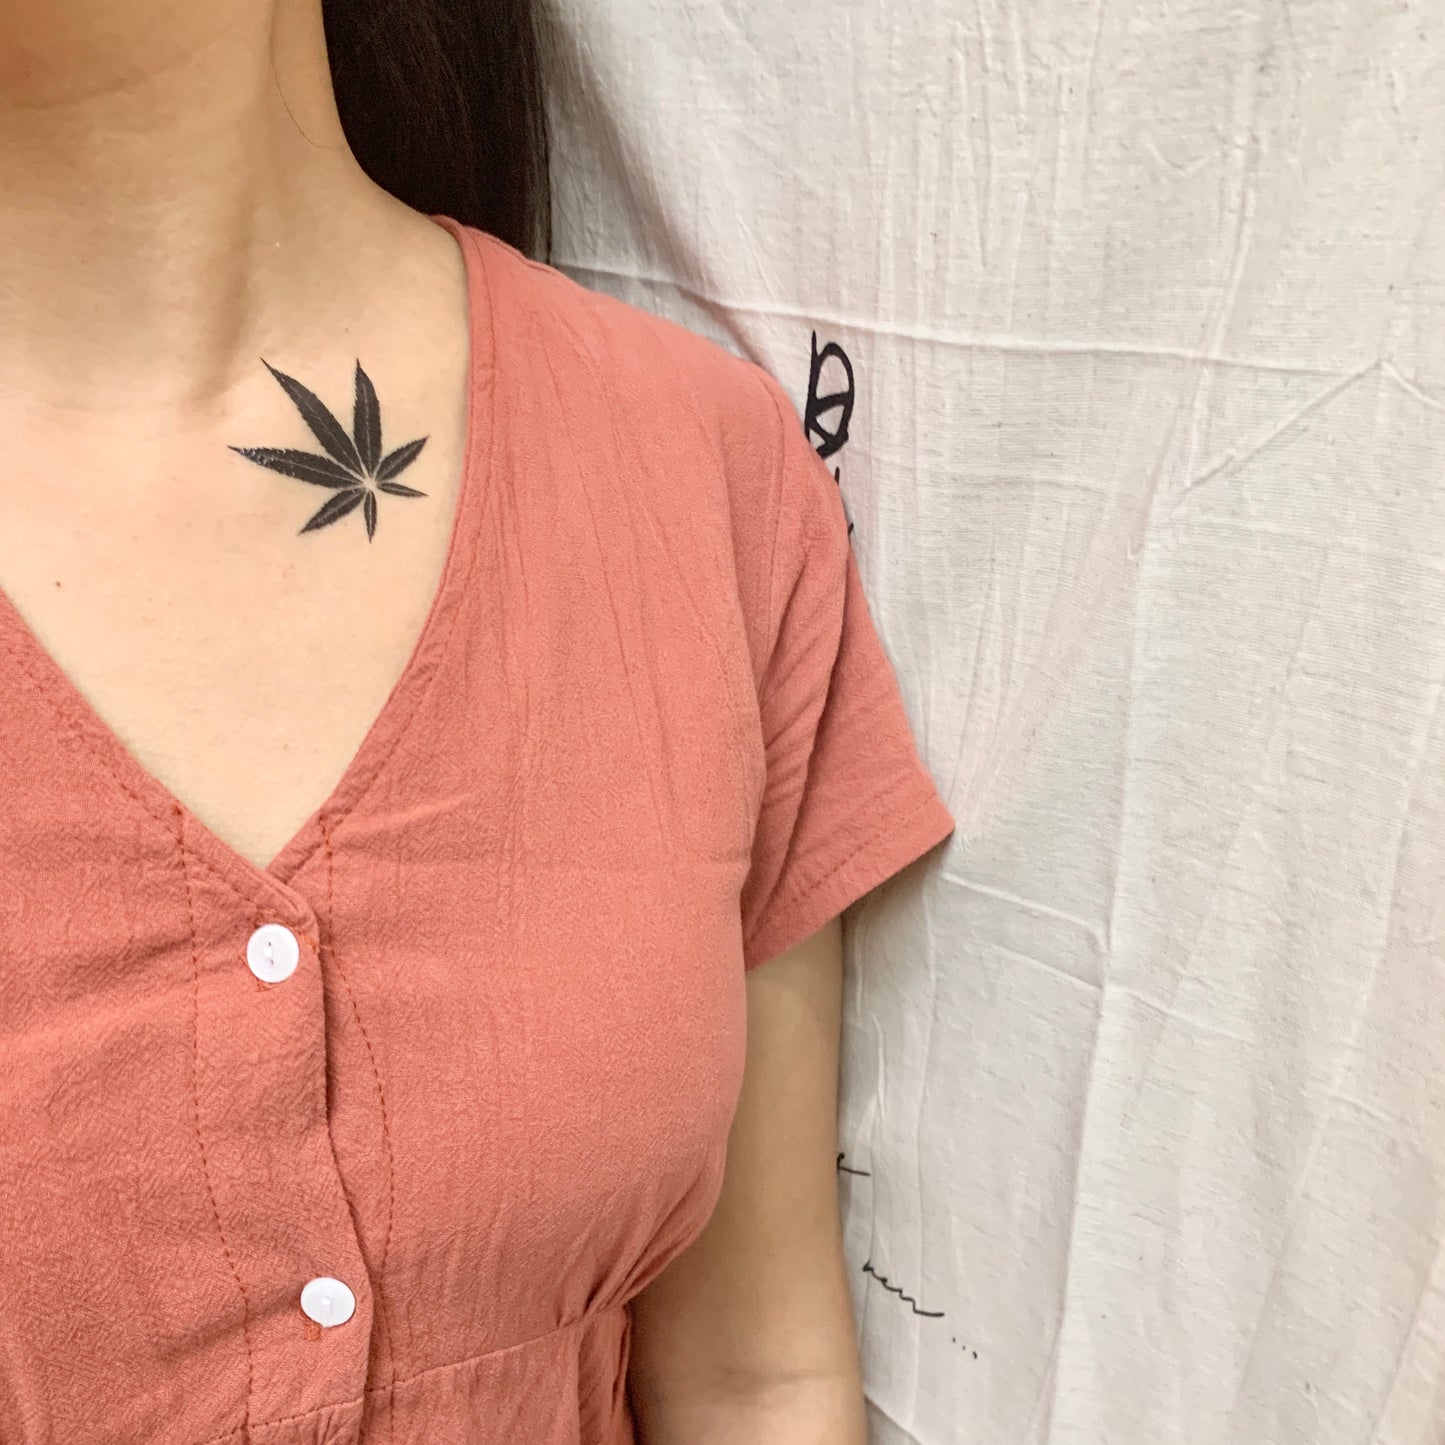 fake small pot leaf cannabis 420 marijuana weed stoner nature temporary tattoo sticker design idea on neck shoulder upper chest